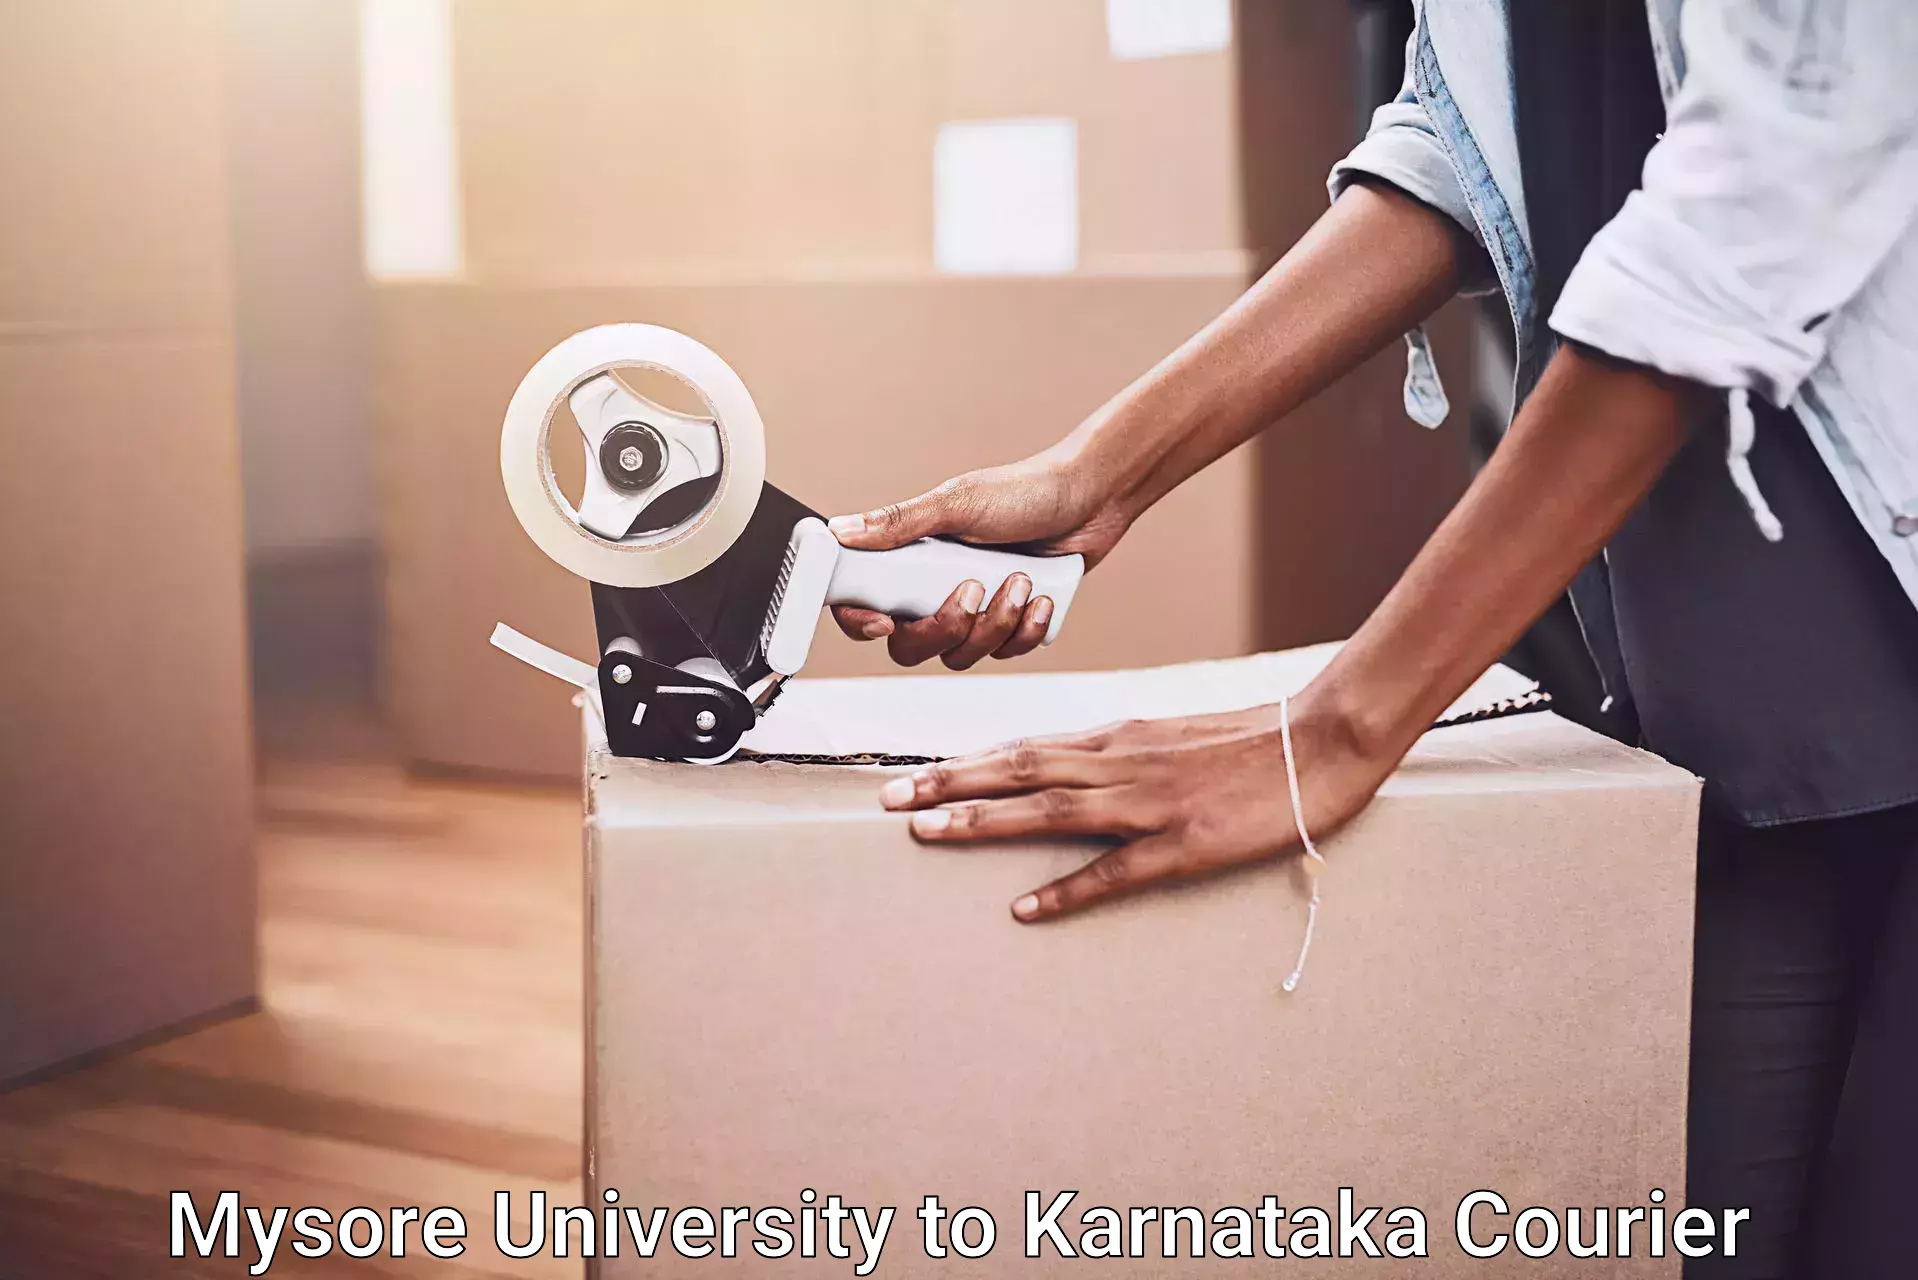 Home moving service Mysore University to Karnataka